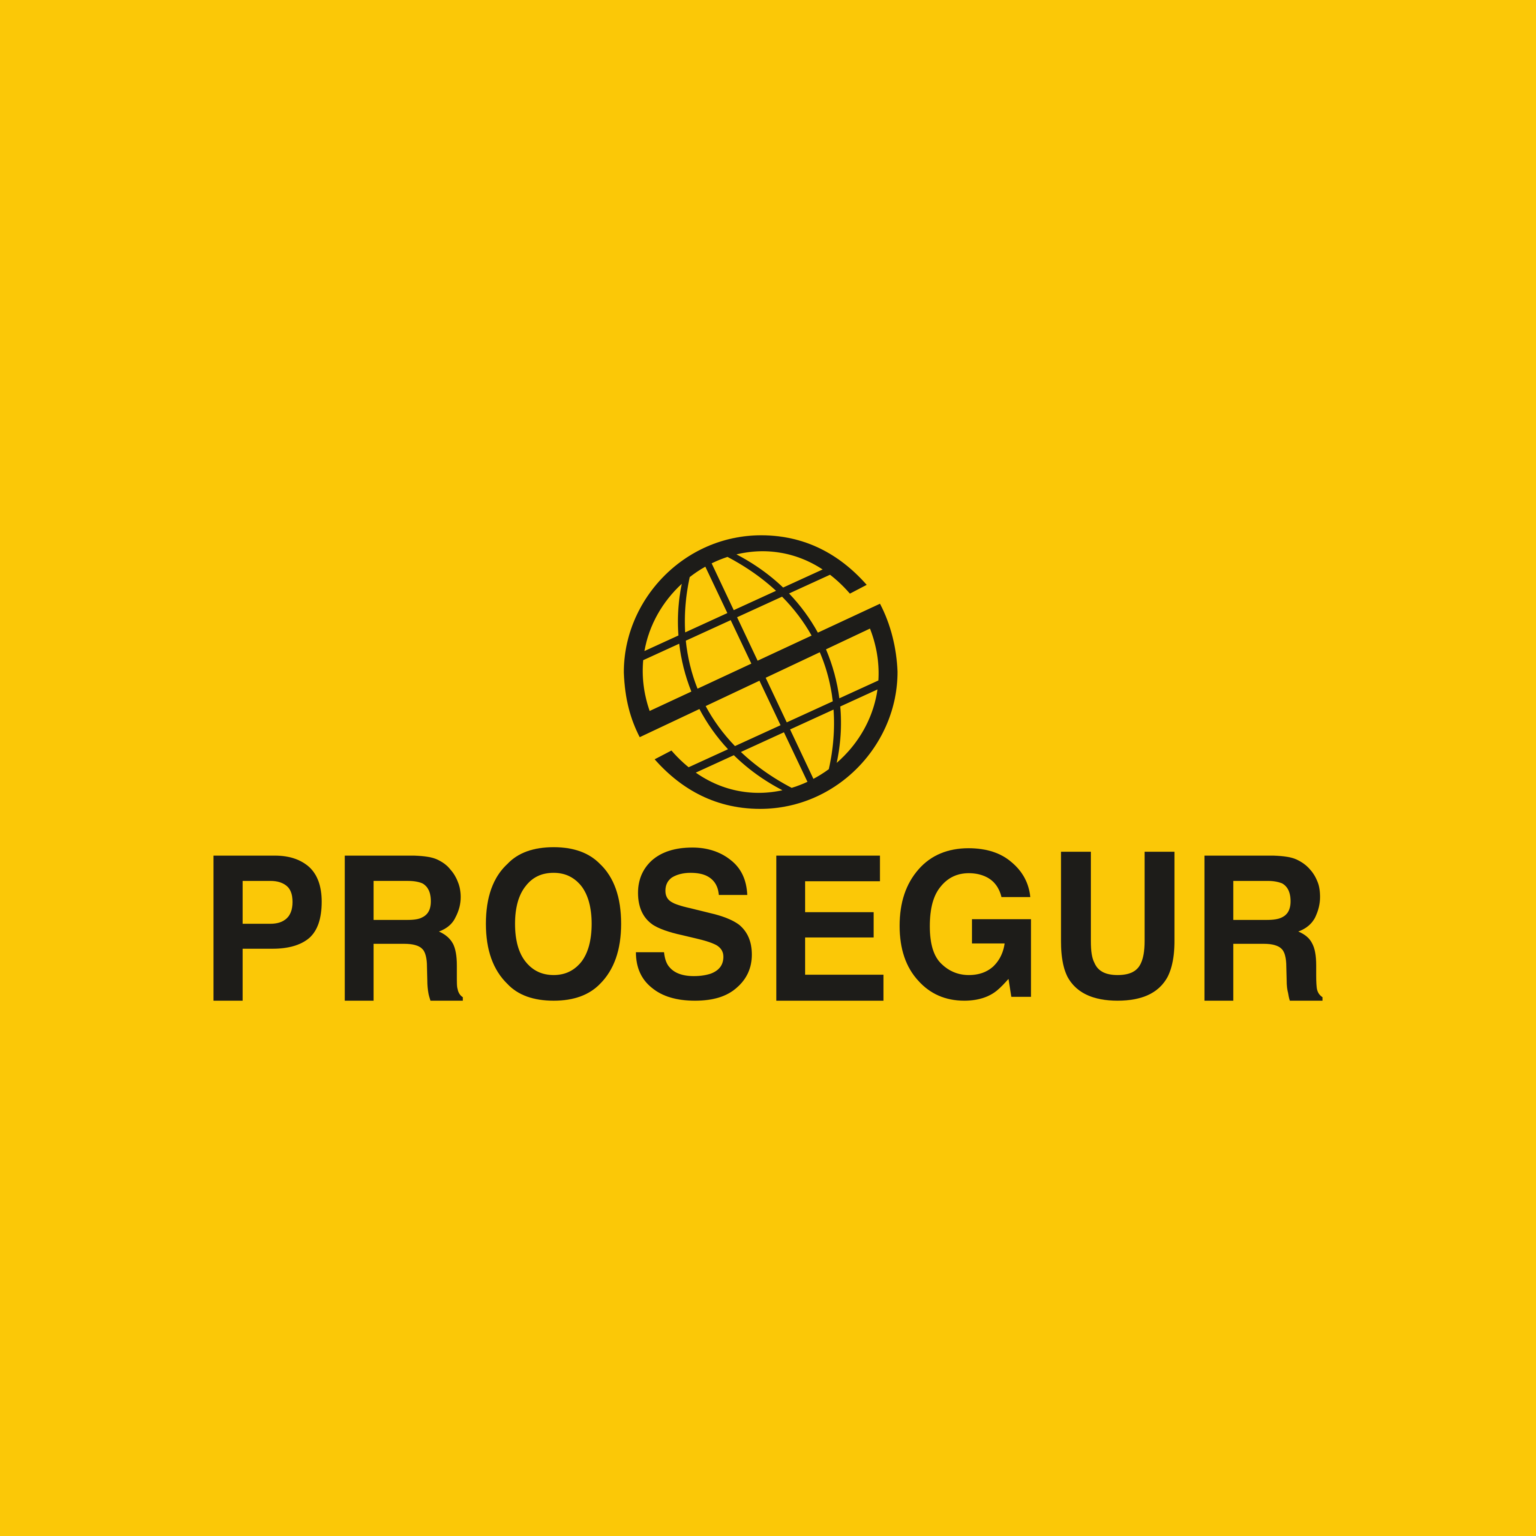 prosegur-logo-0-1536x1536